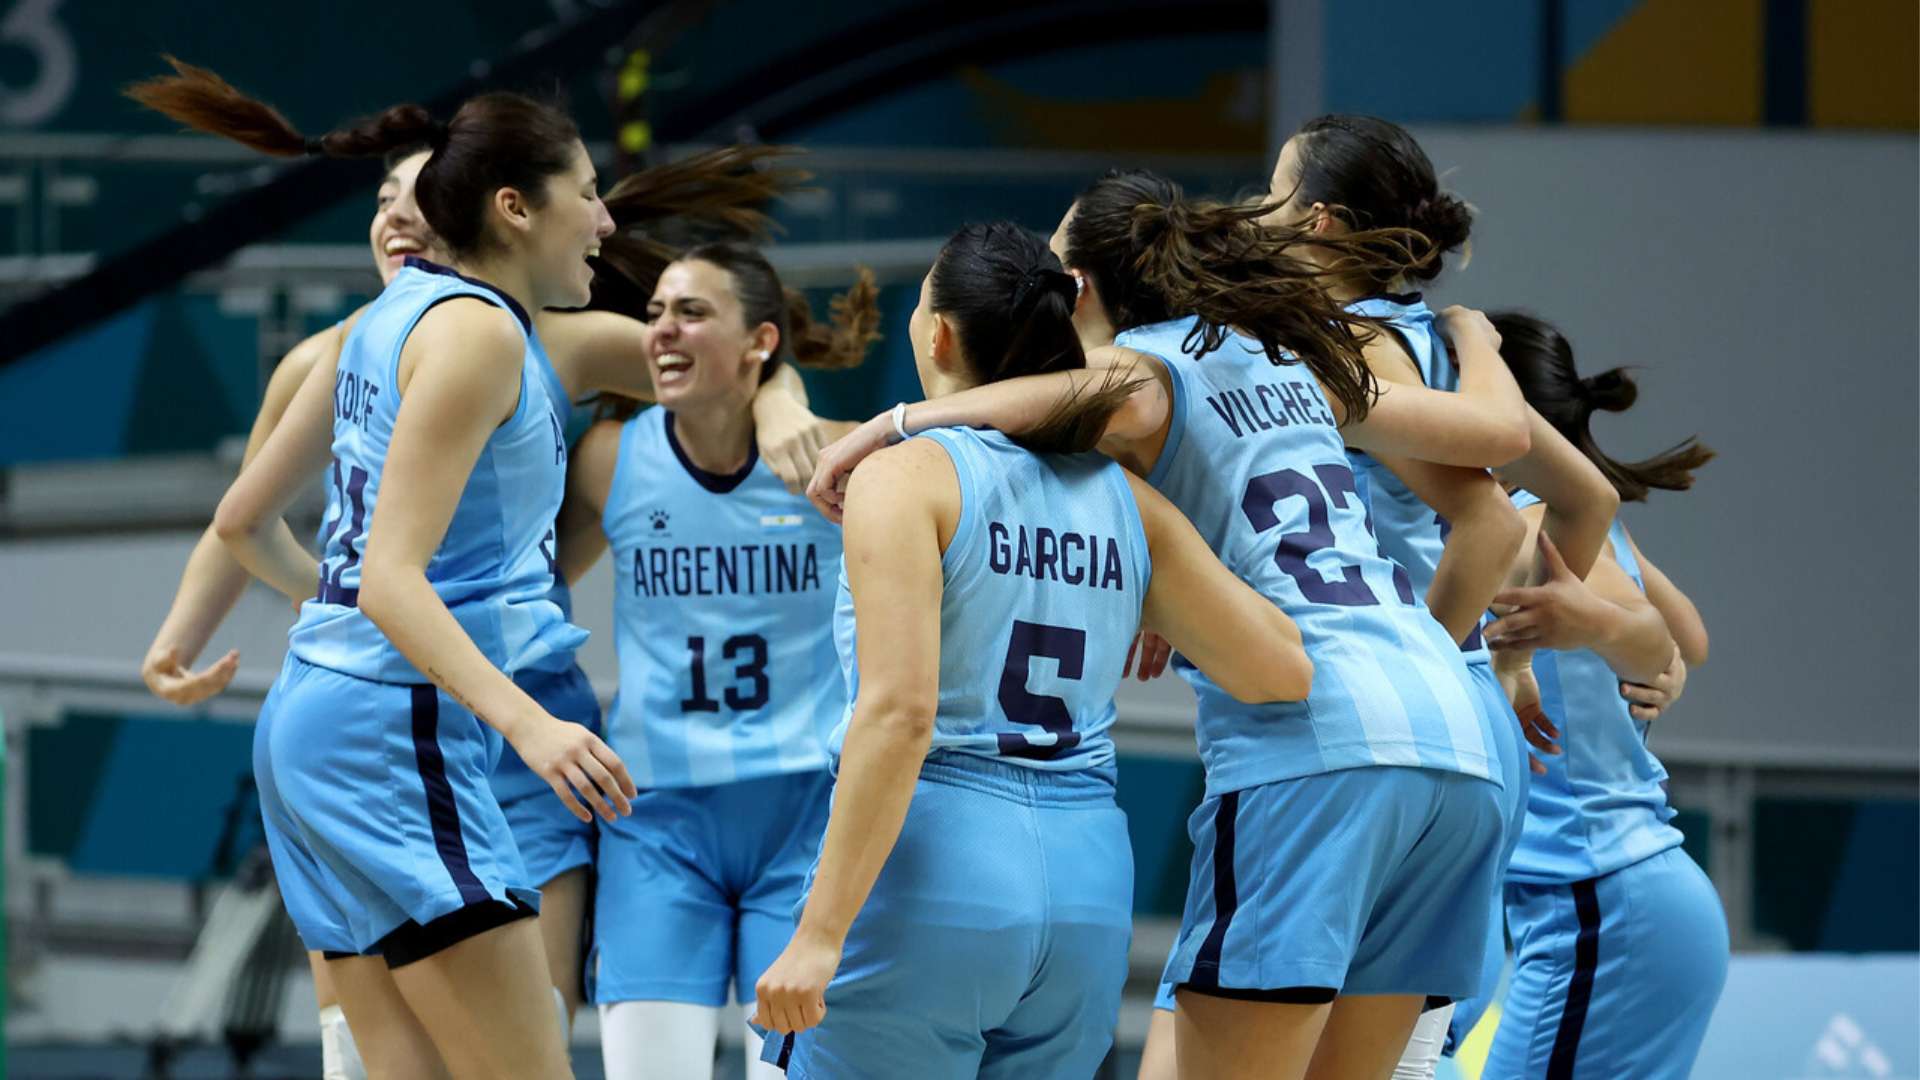 Argentina defeats Puerto Rico and advances to the semi-finals.